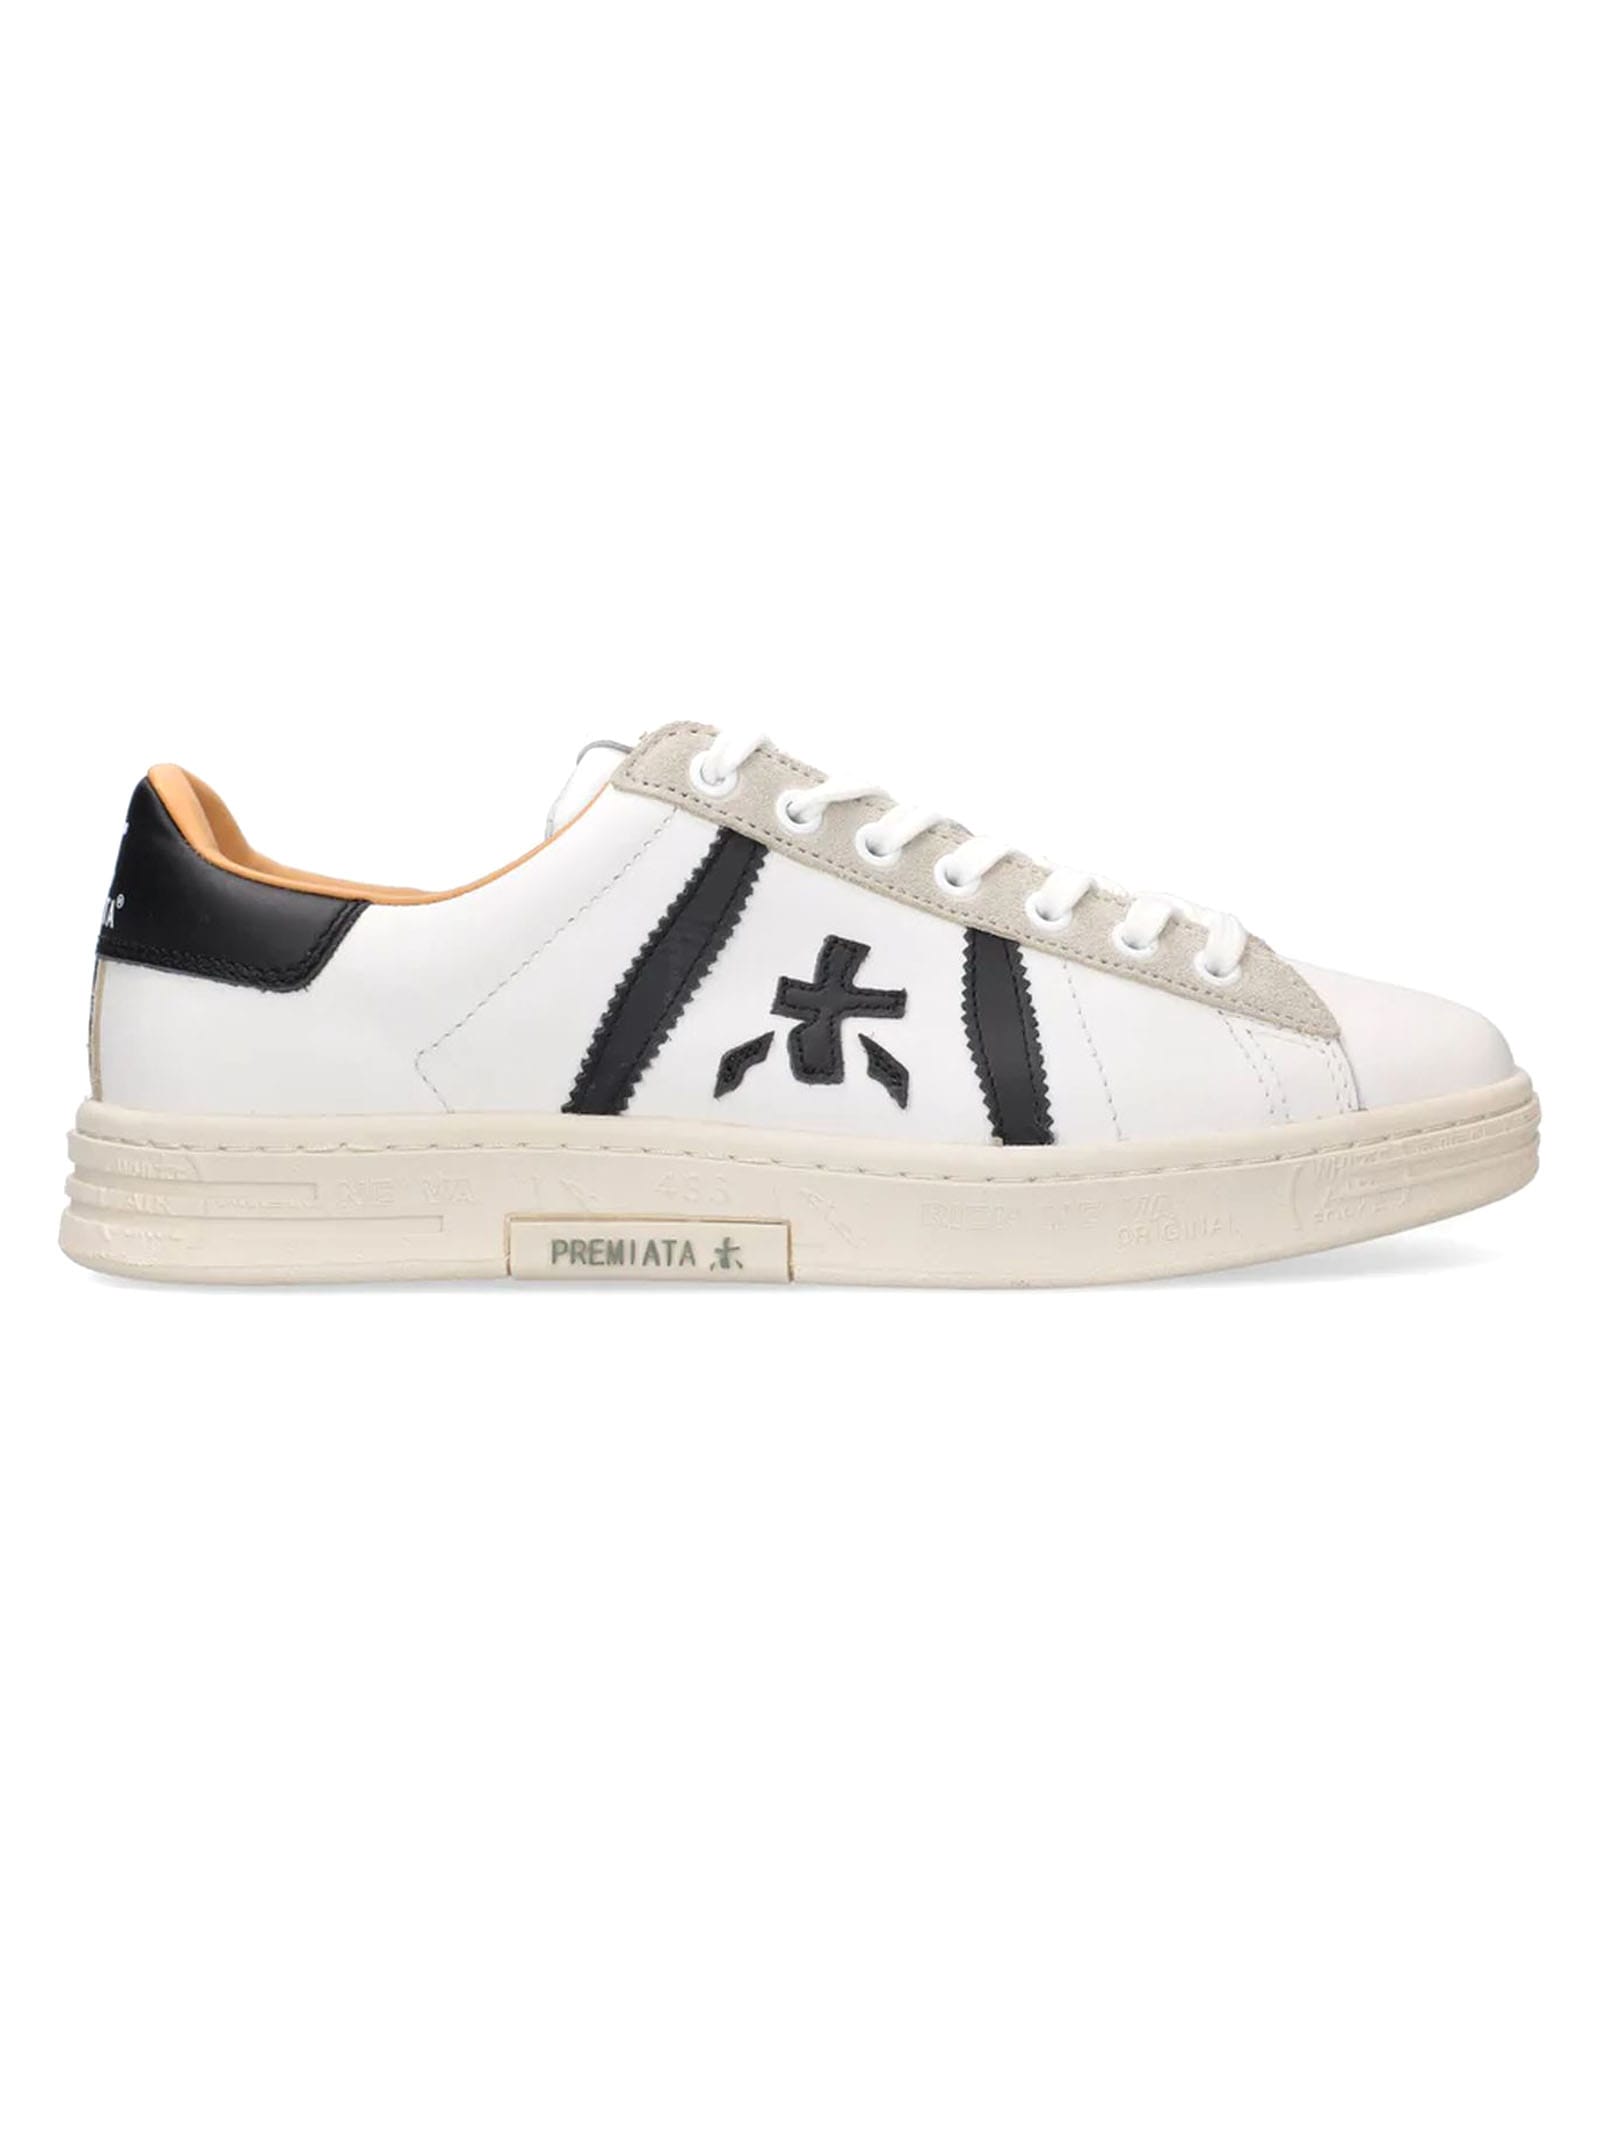 Premiata White Leather Russel Sneakers